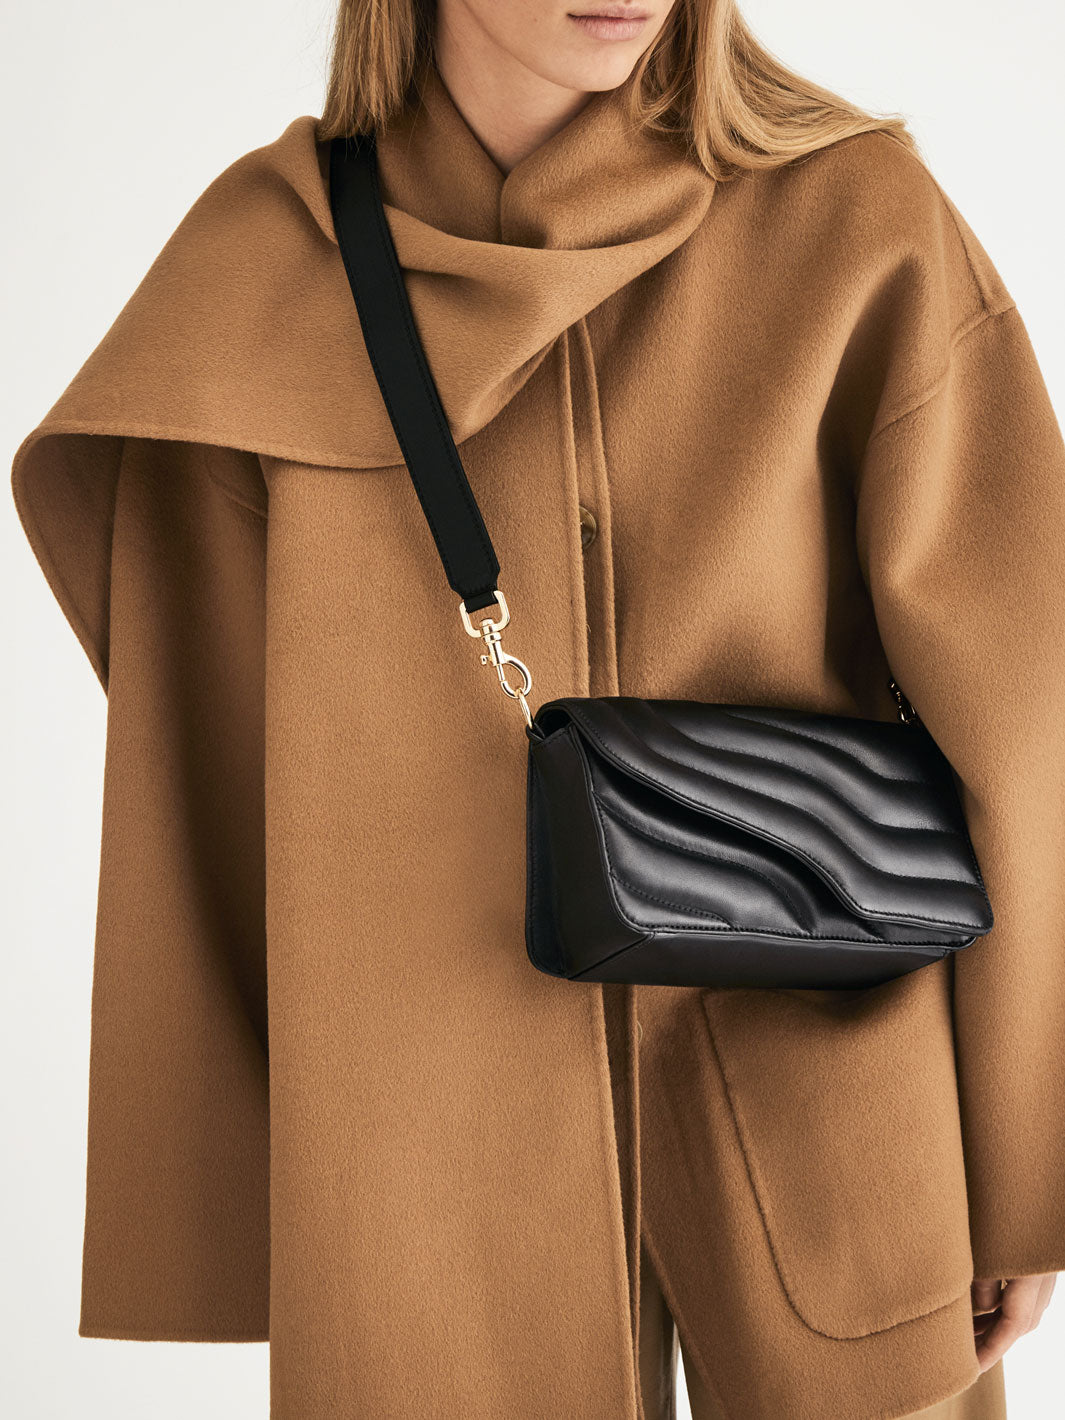 Assisi Black Quilted Nappa Shoulder Bag